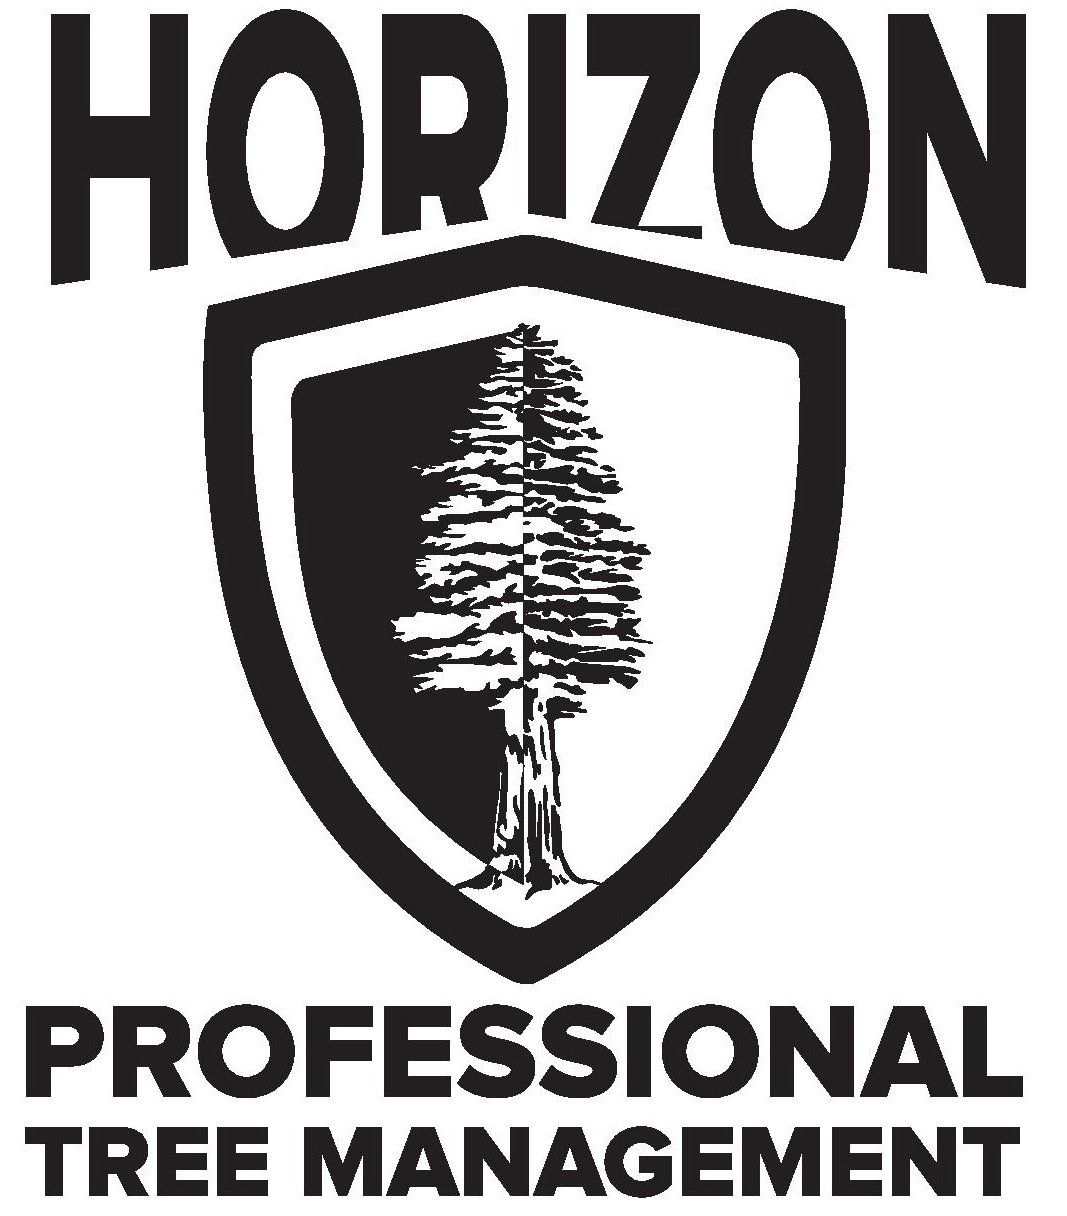 Horizon Professional Tree Management